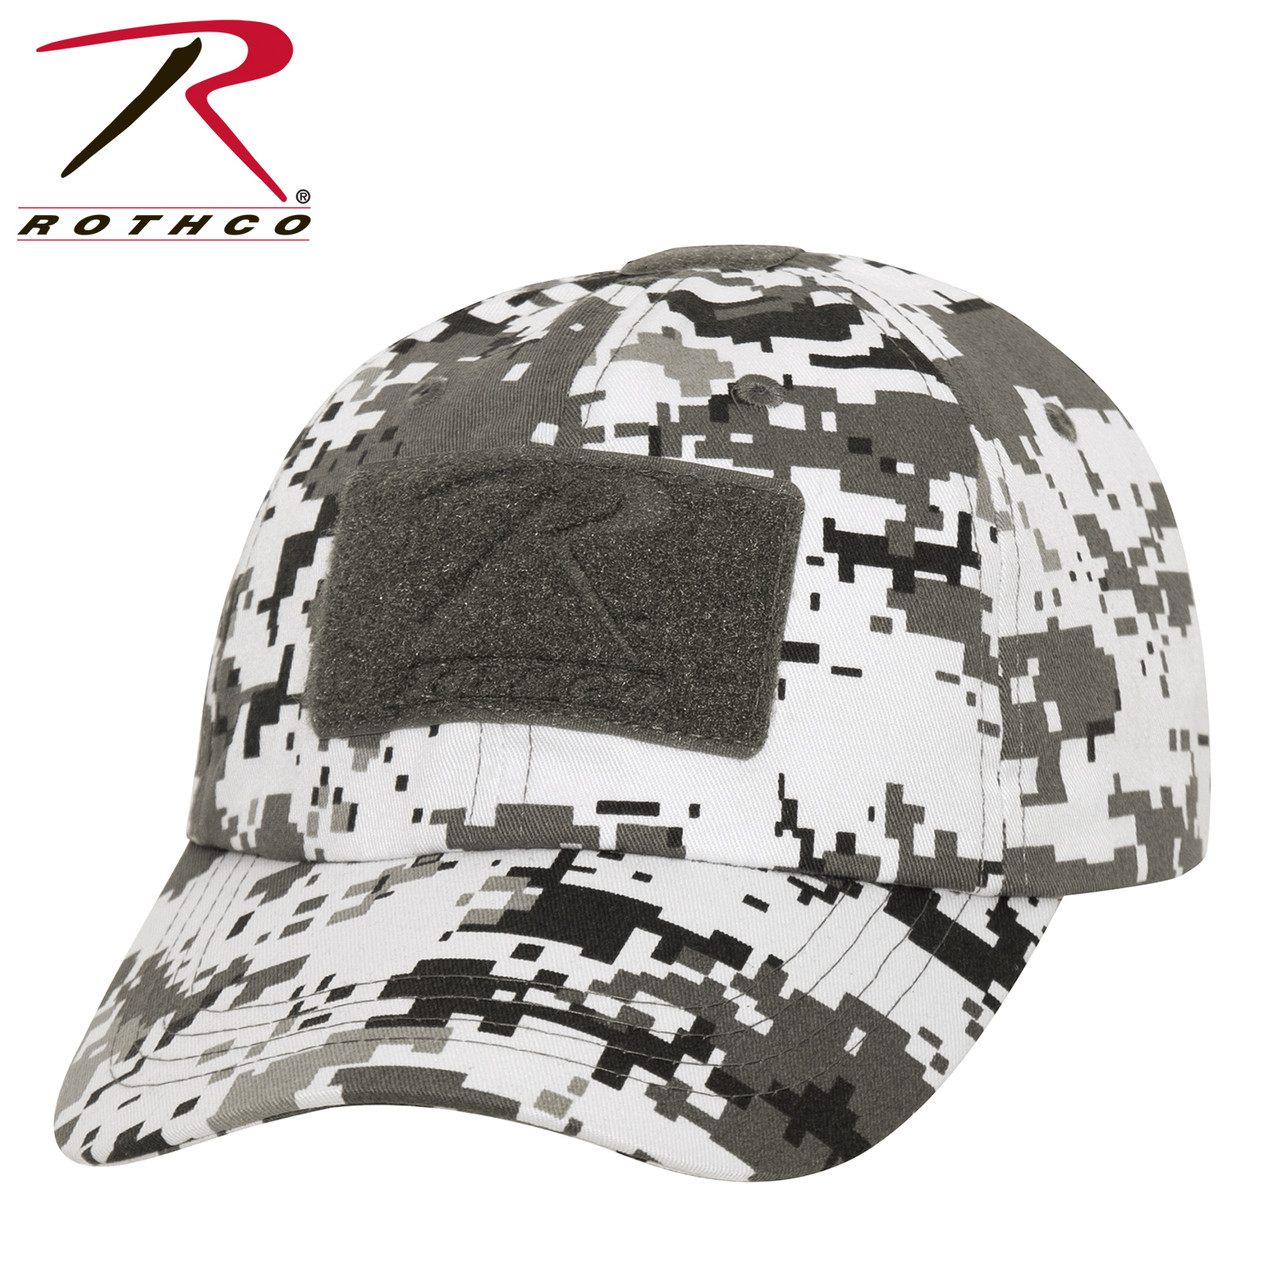 93362 - Rothco Tactical Operator Cap - Urban Digital Camouflage